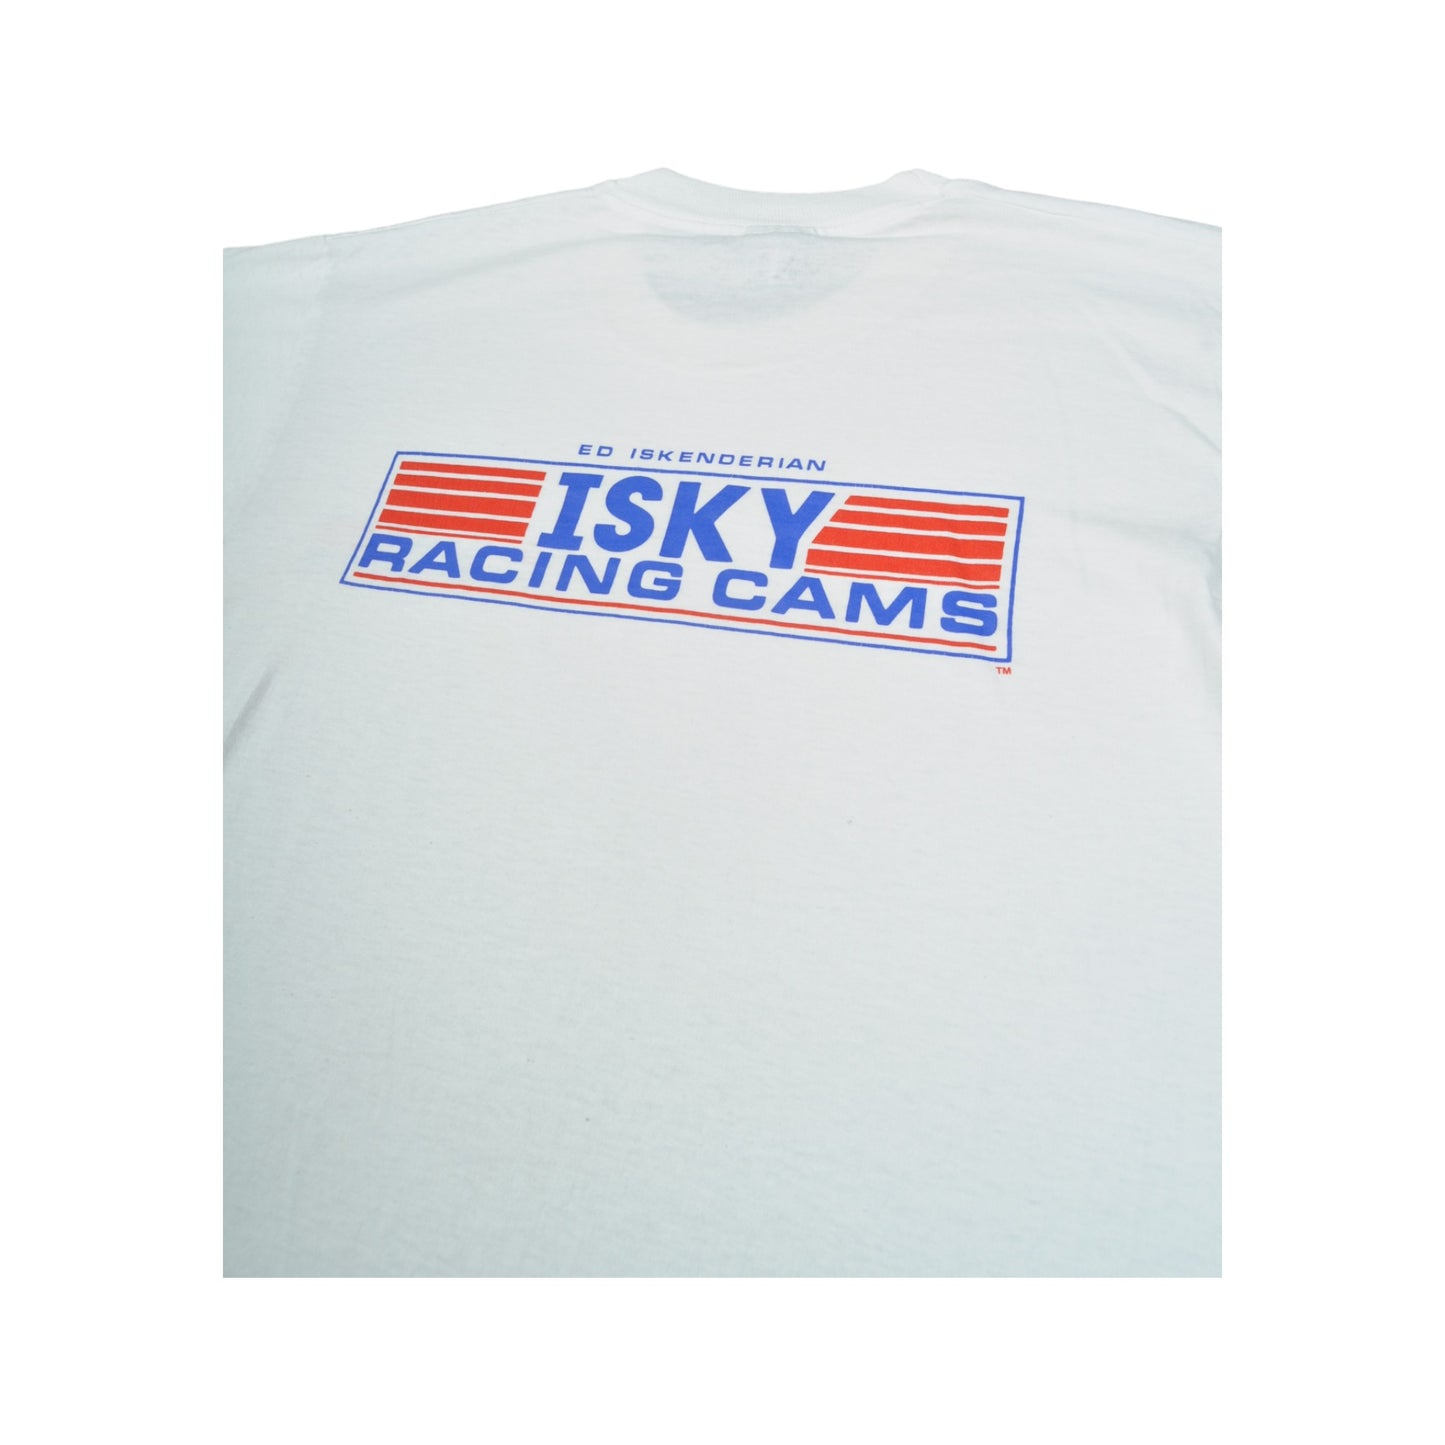 Vintage ISKY Racing Cams Single Stitch T-Shirt White Medium